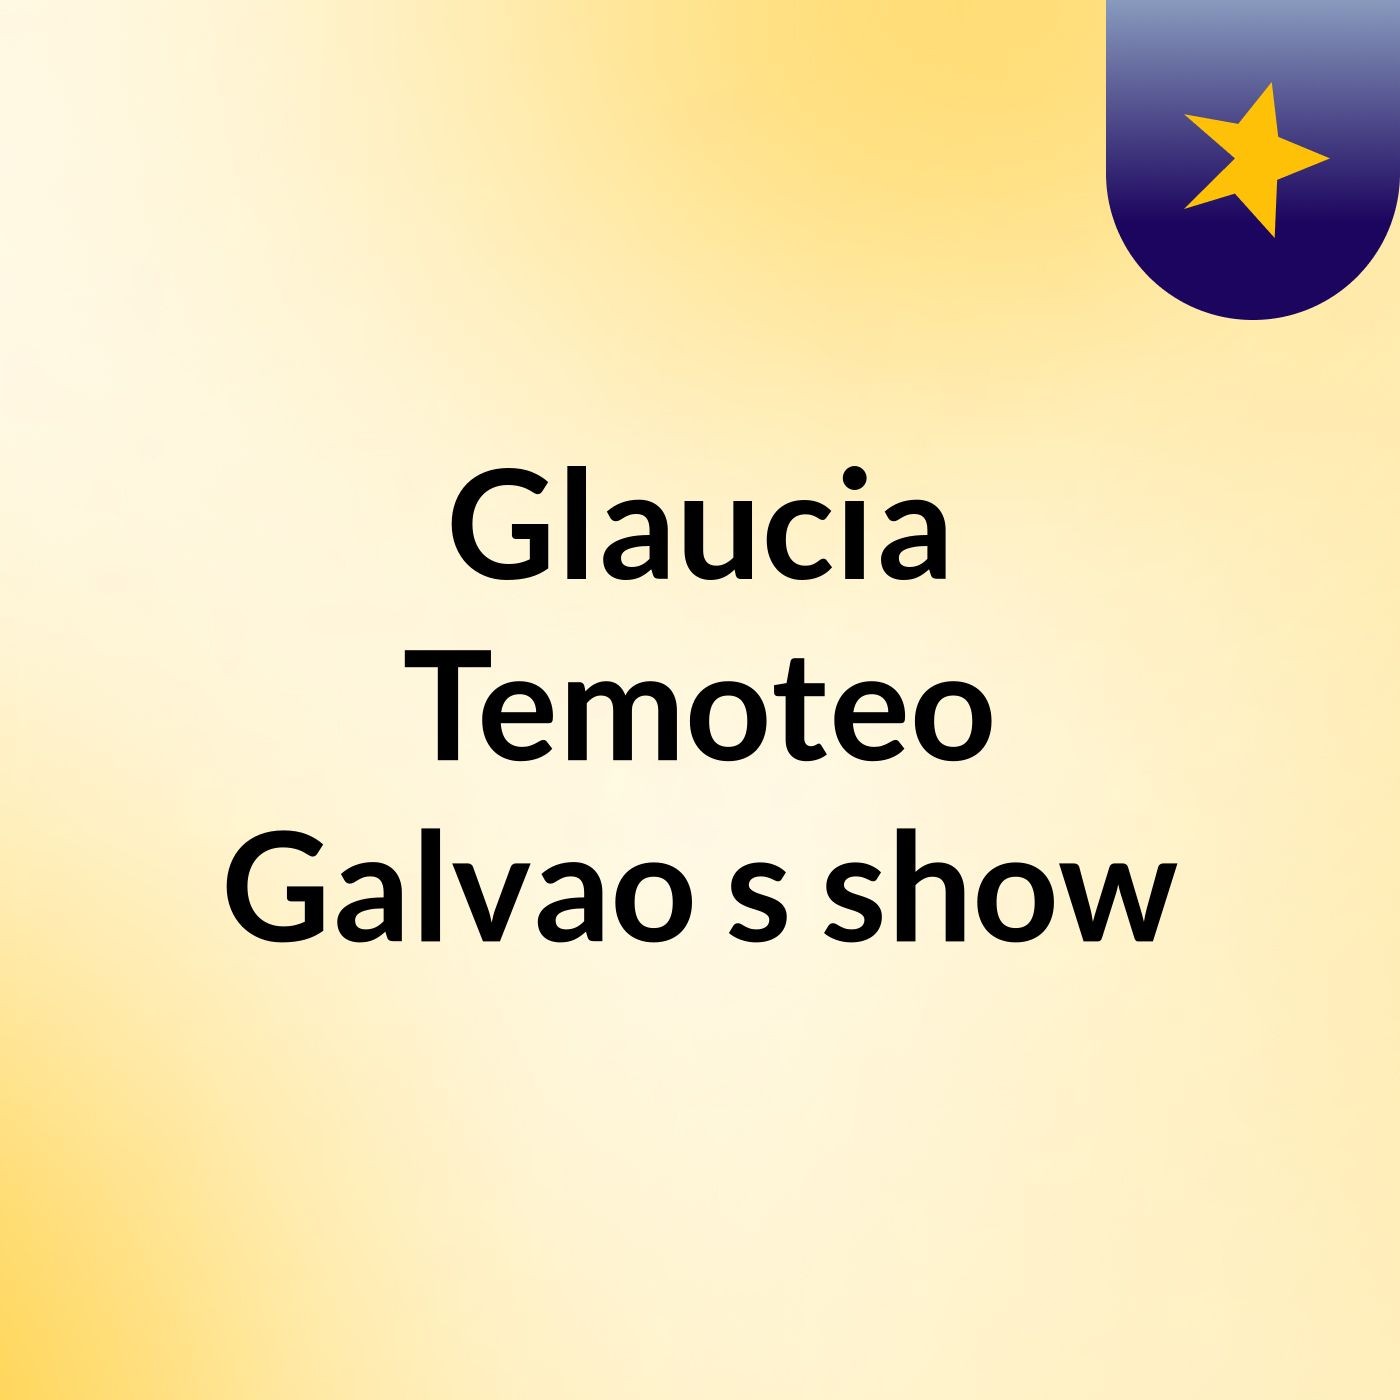 Glaucia Temoteo Galvao's show